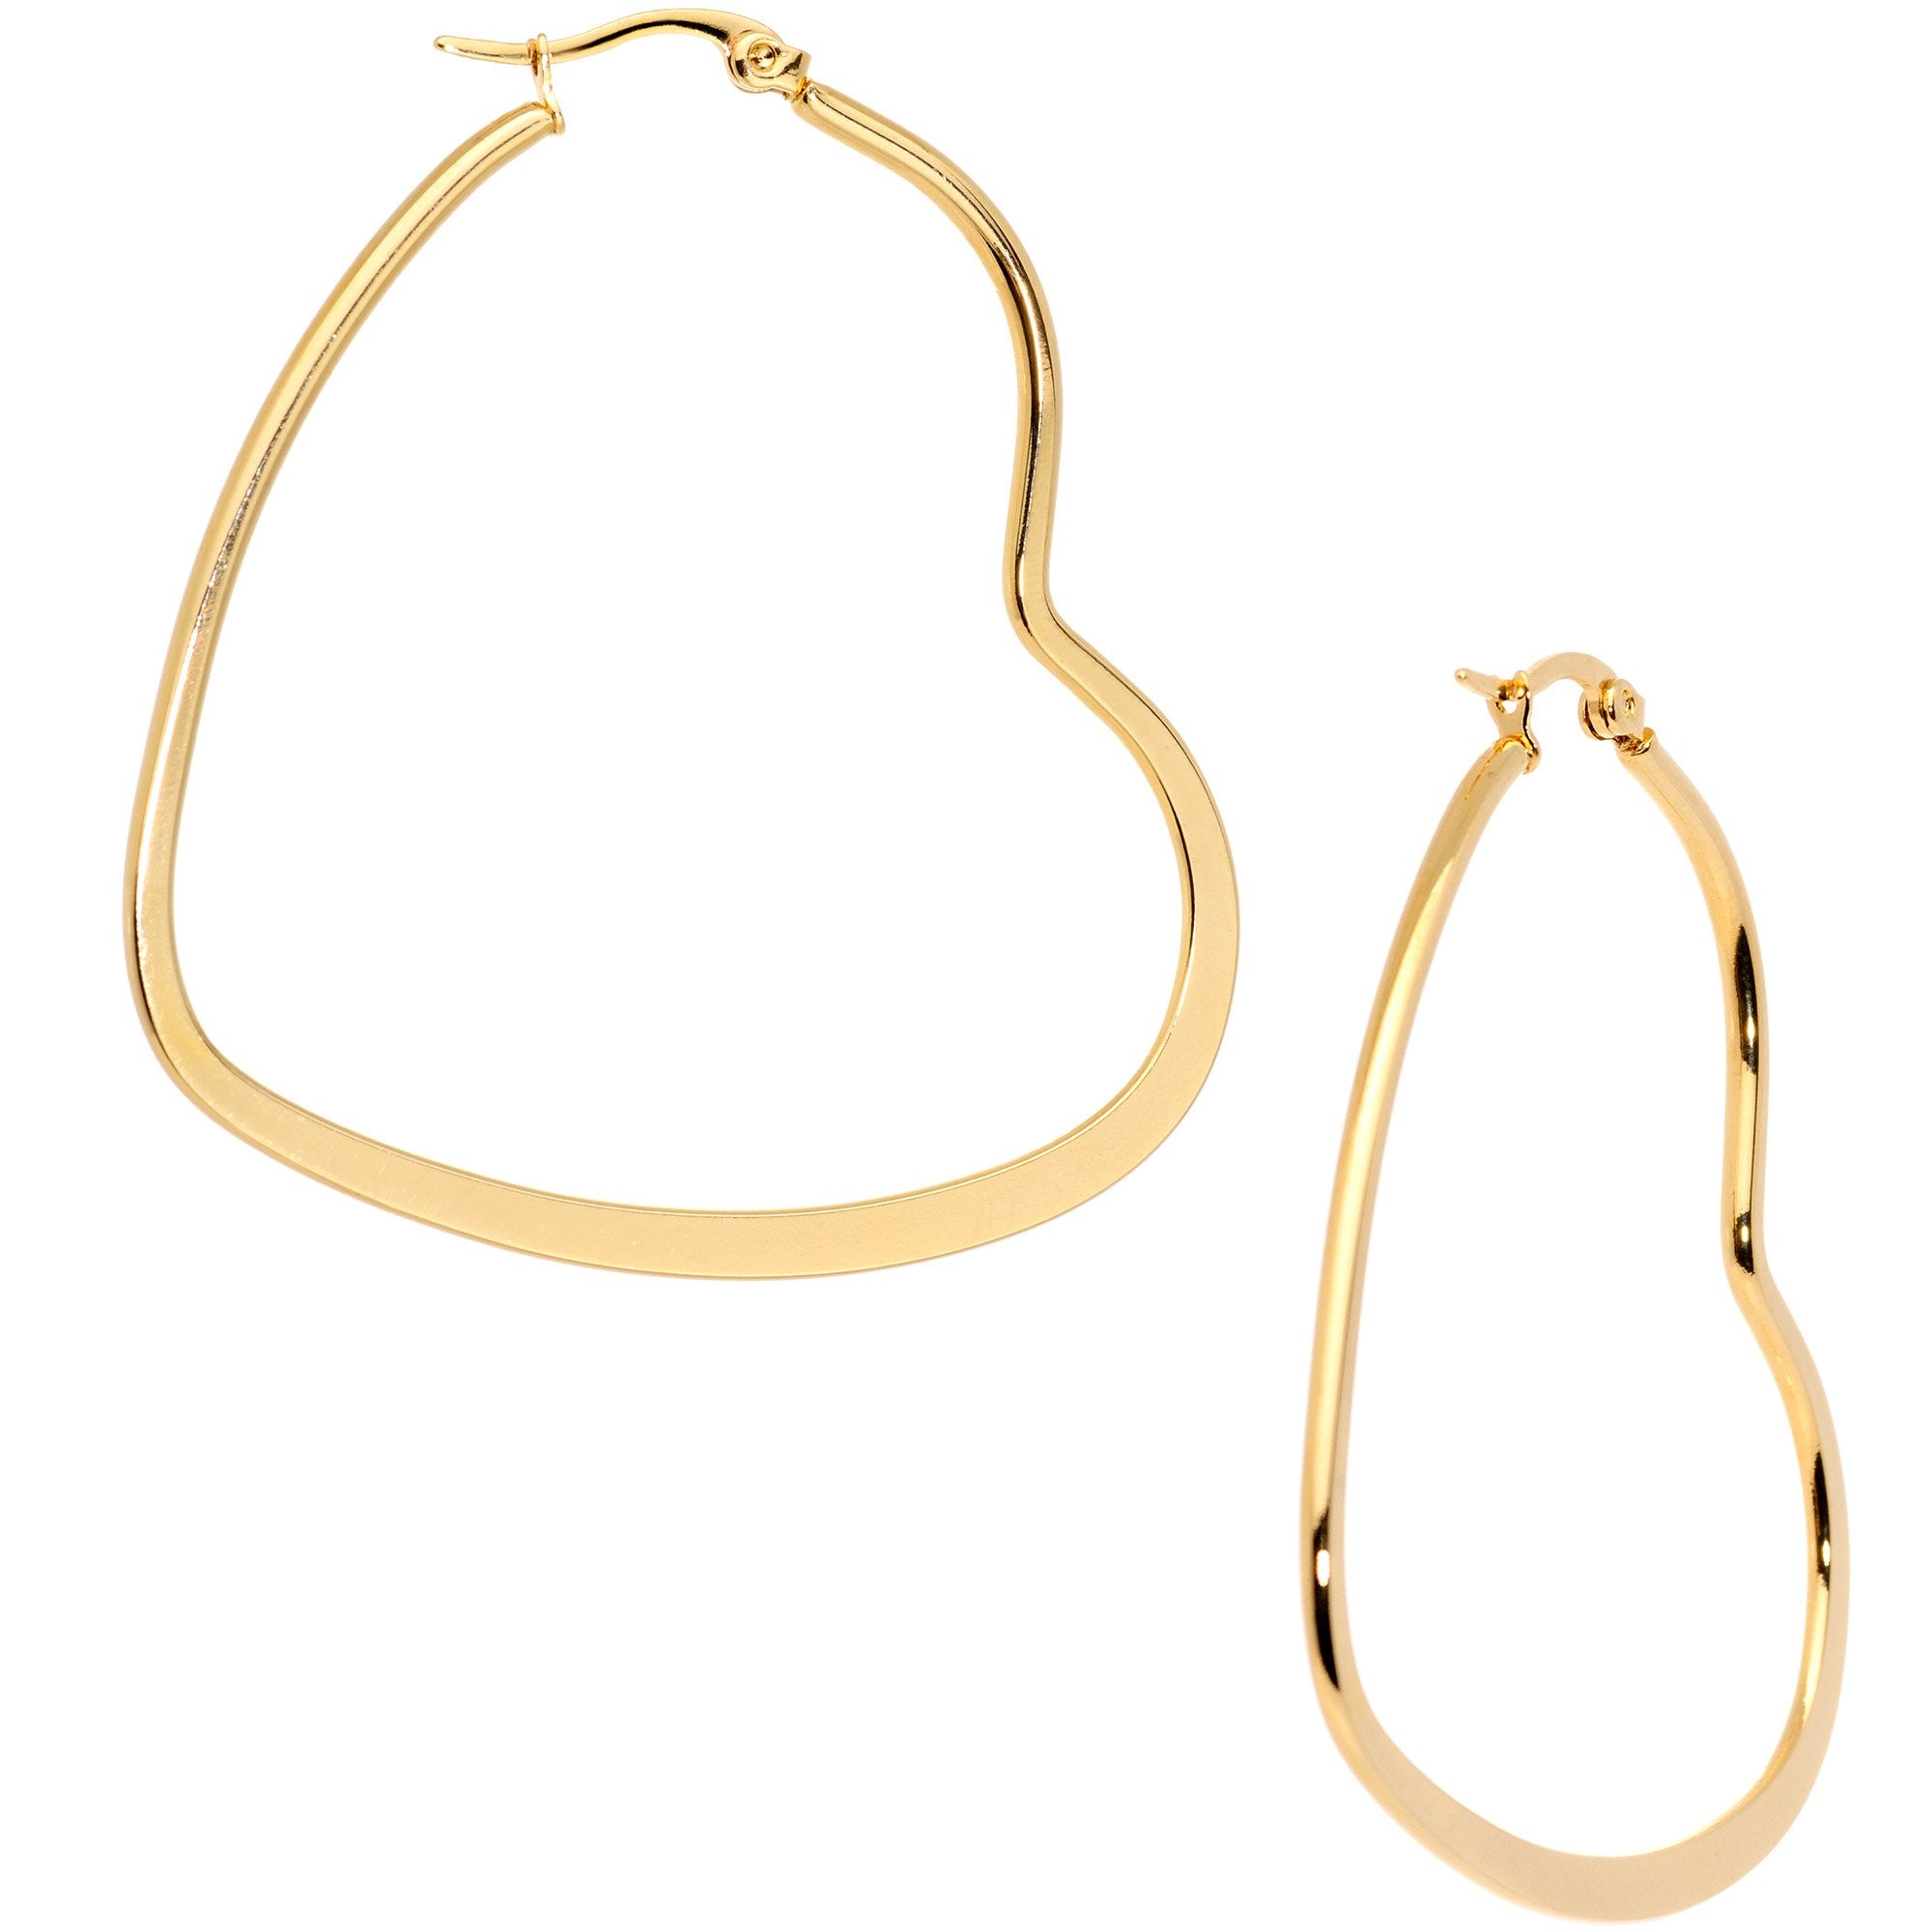 50mm Gold Tone PVD Stainless Steel Heart Hoop Earrings